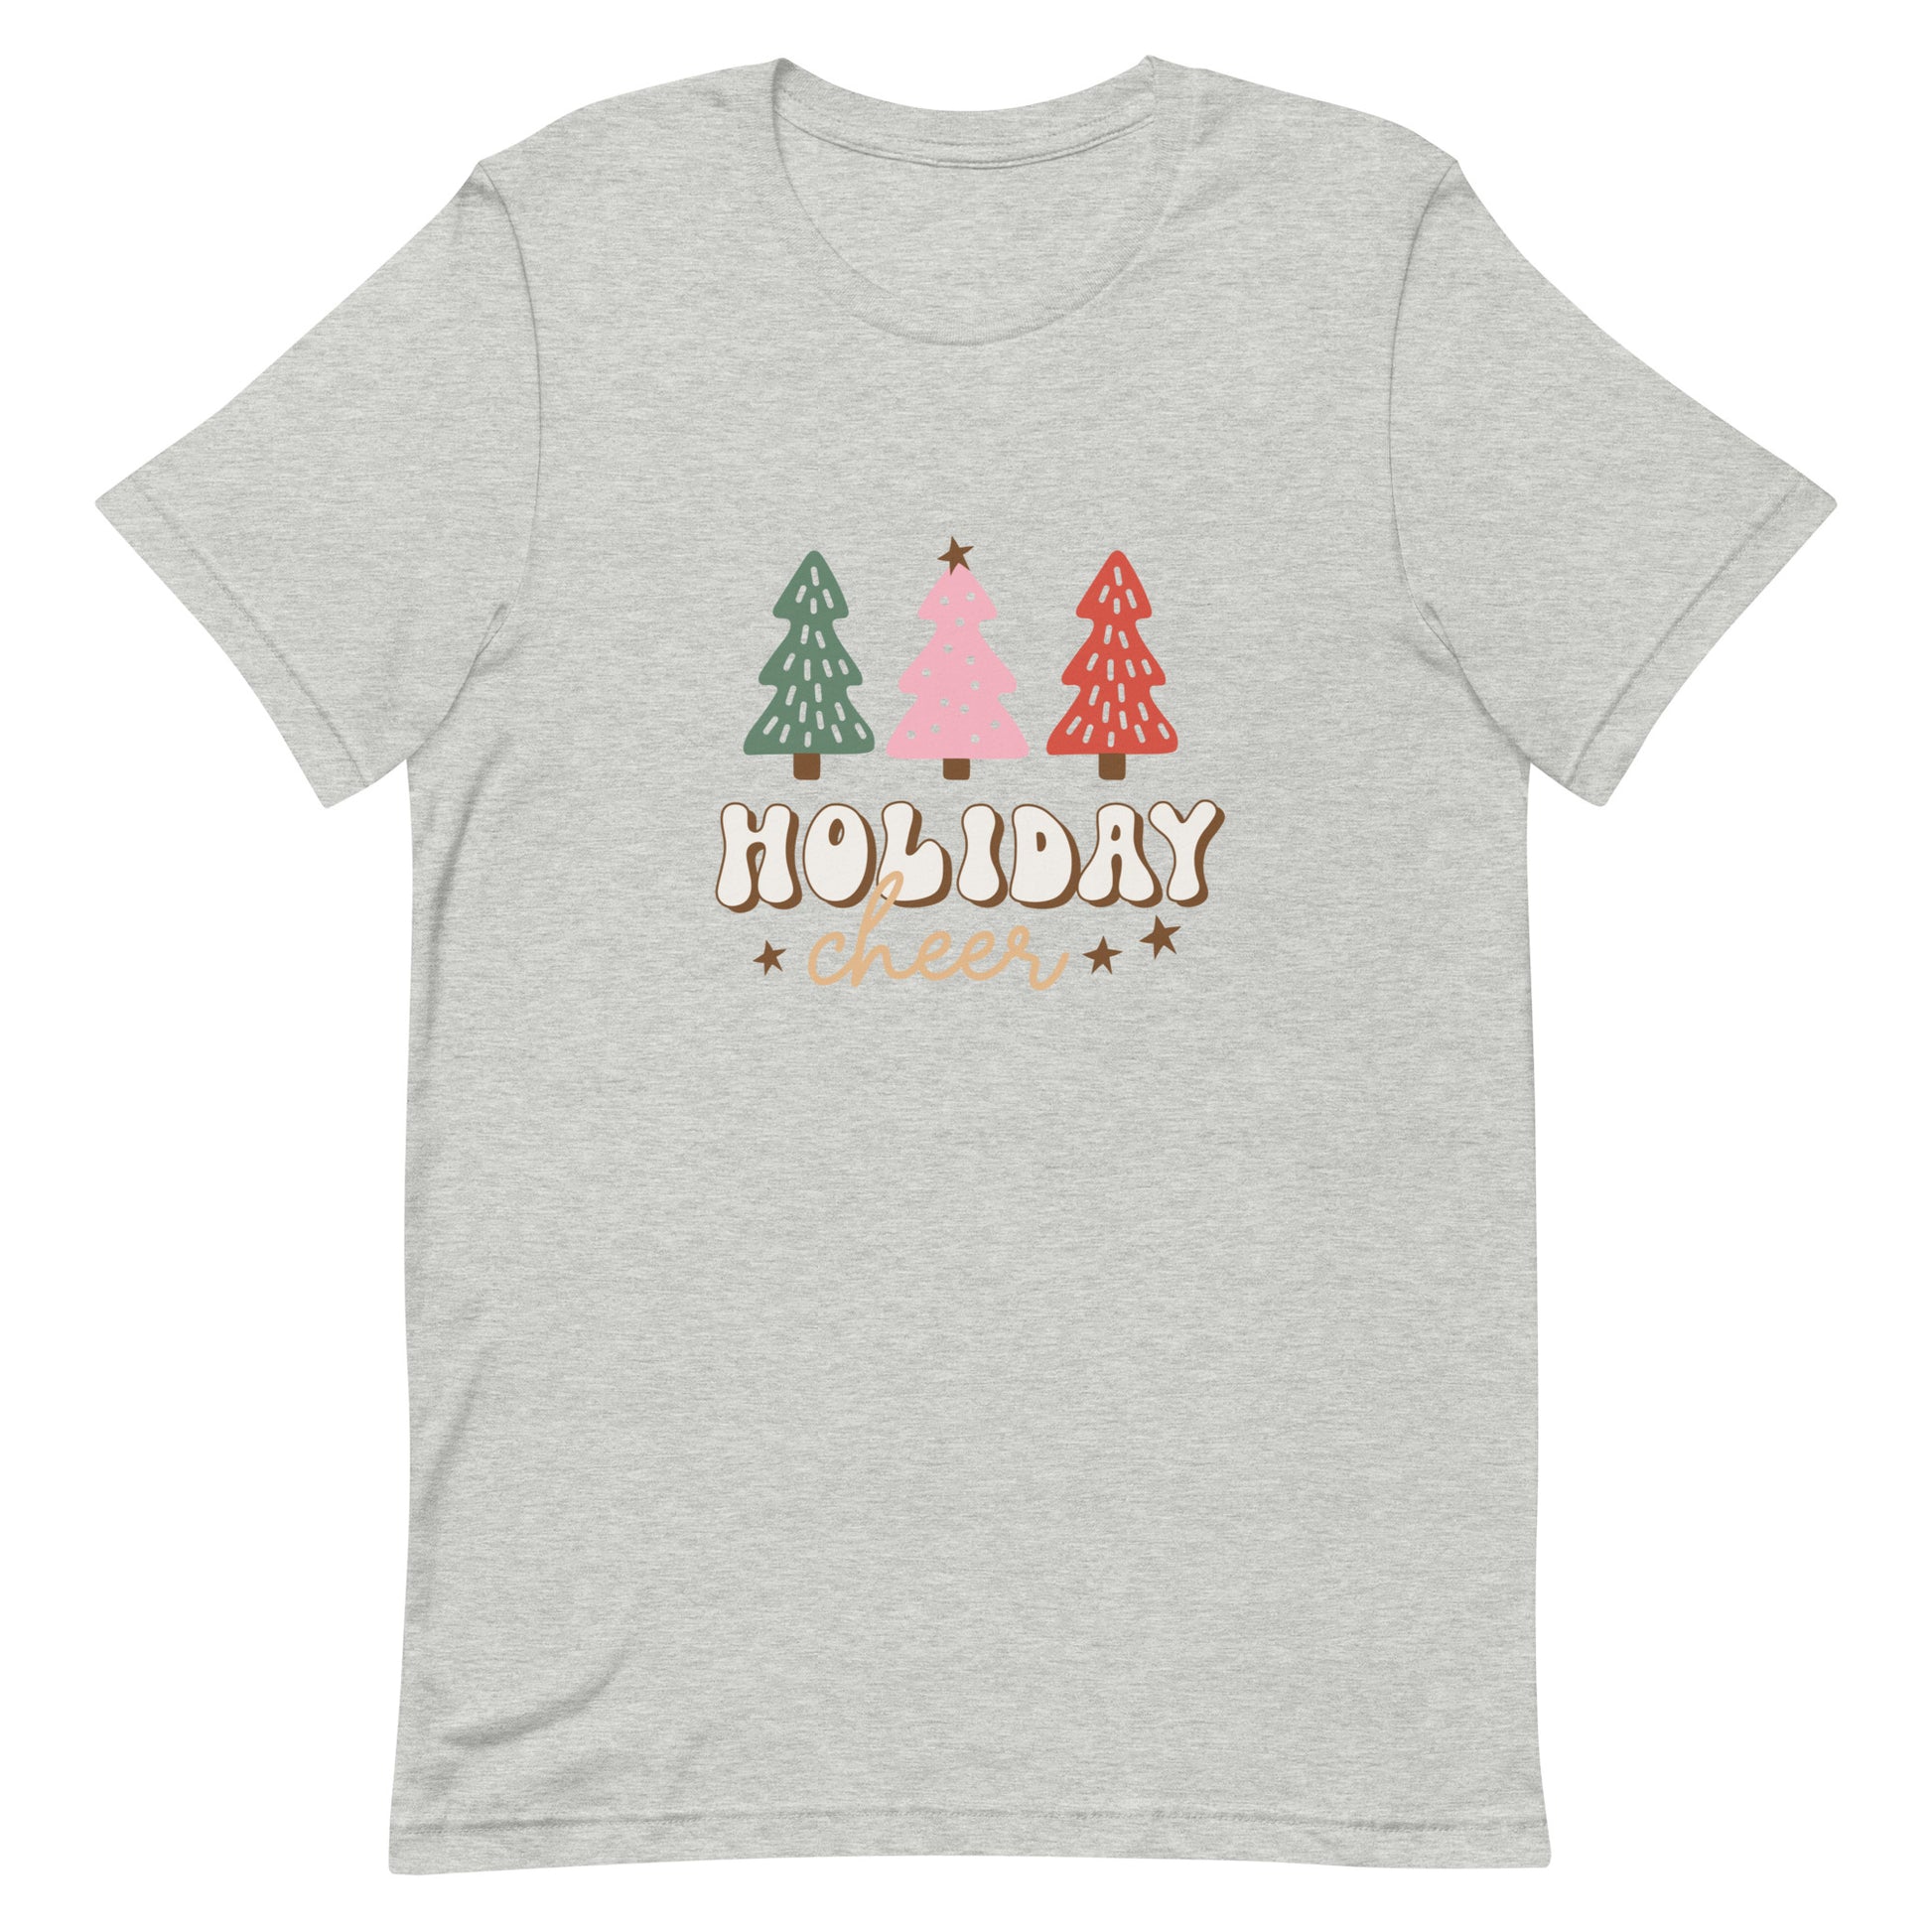 Holiday Cheer Unisex T-shirt - Christmas